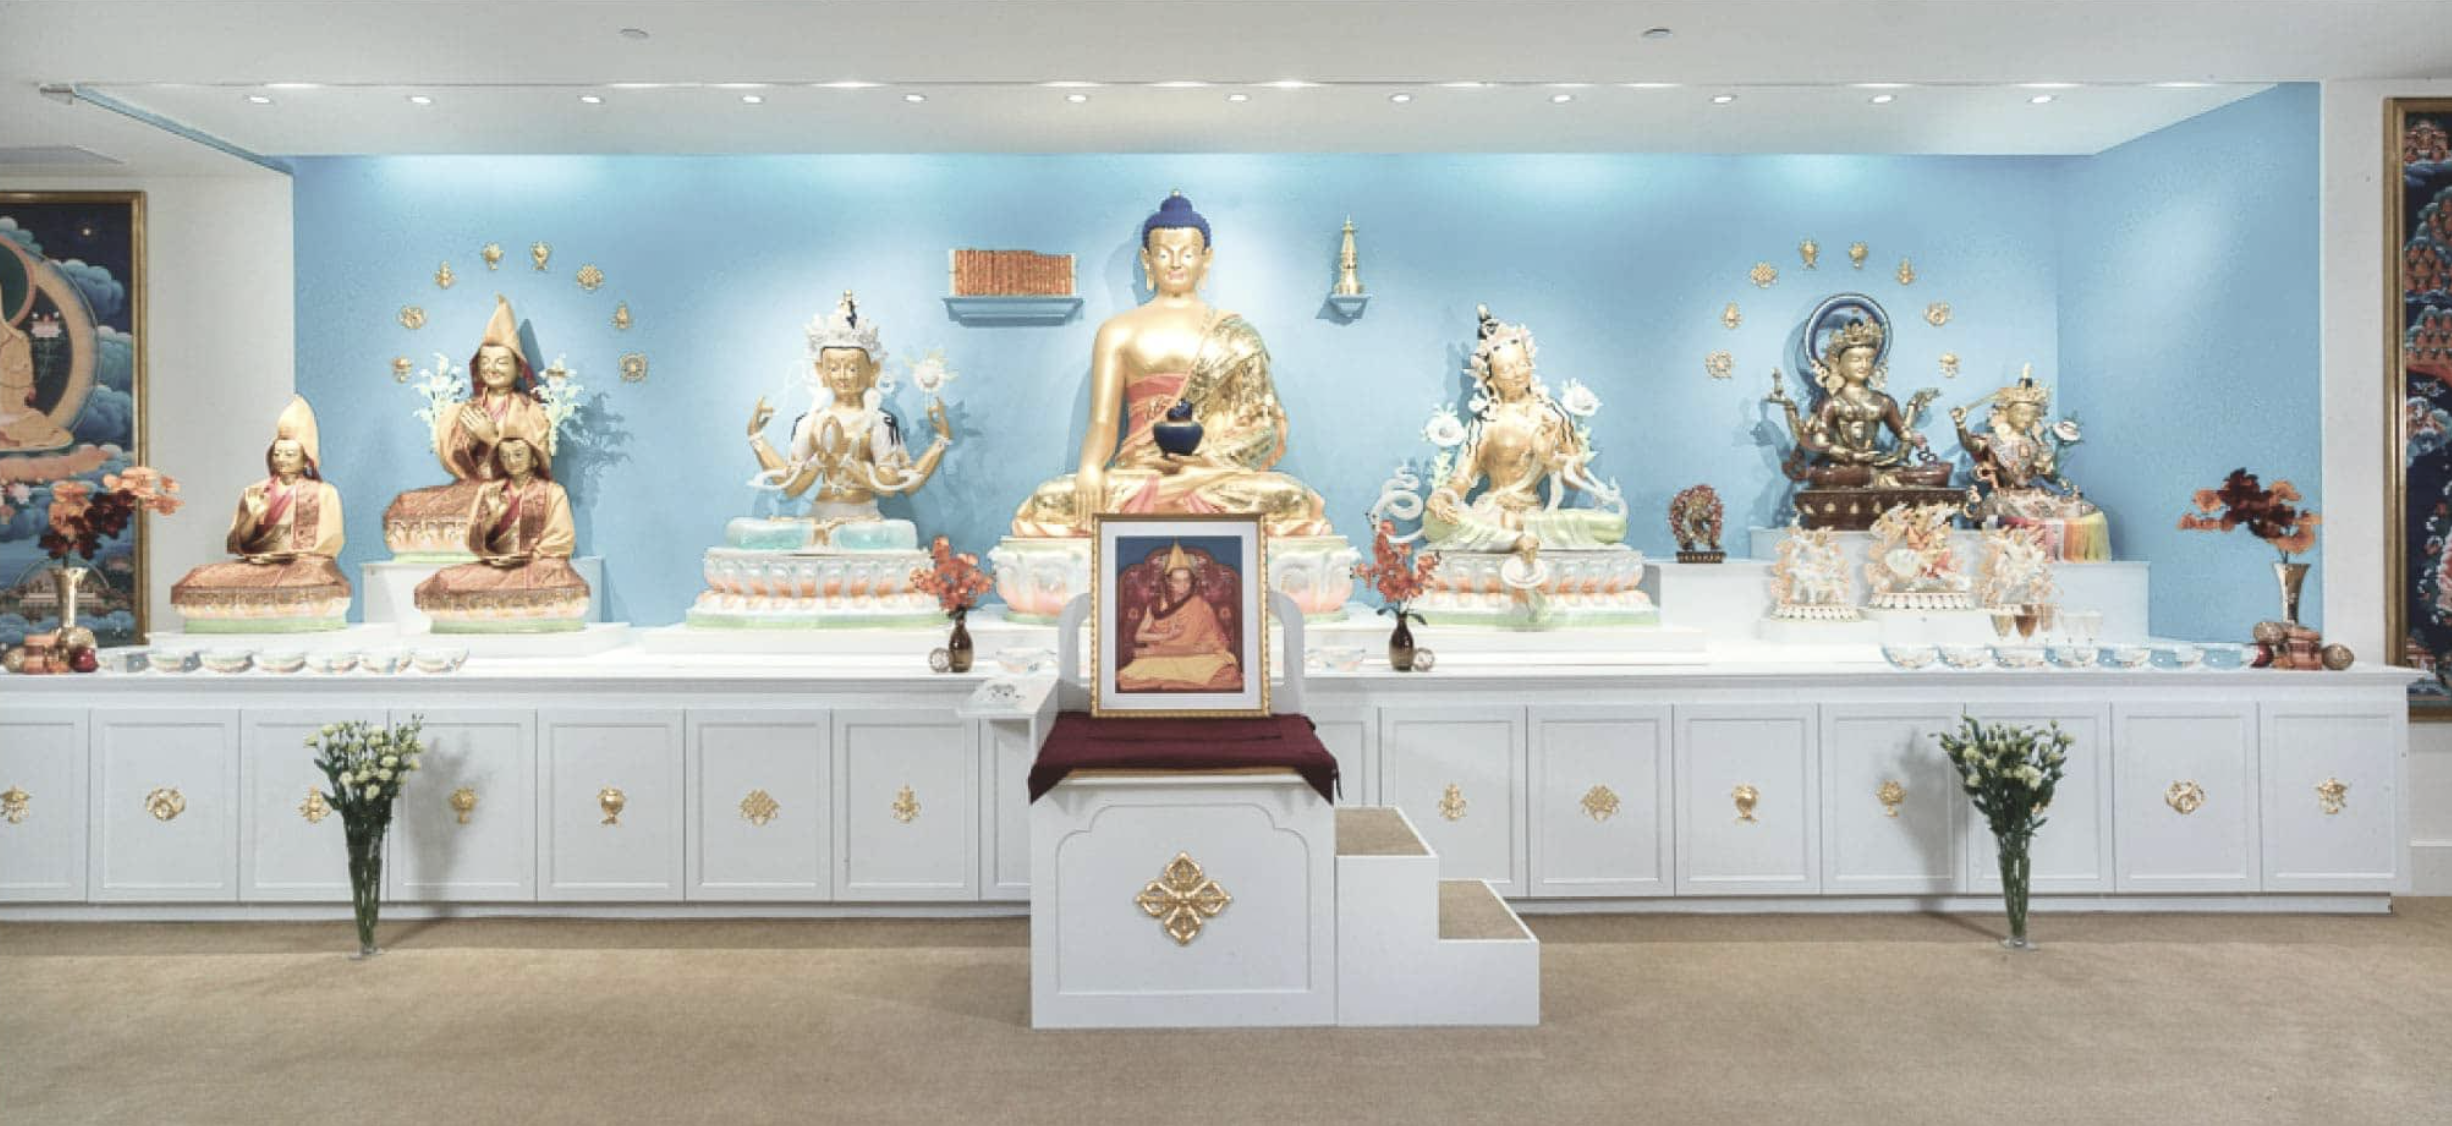 Residing in a Peaceful Heart - Kadampa Meditation Center New York City